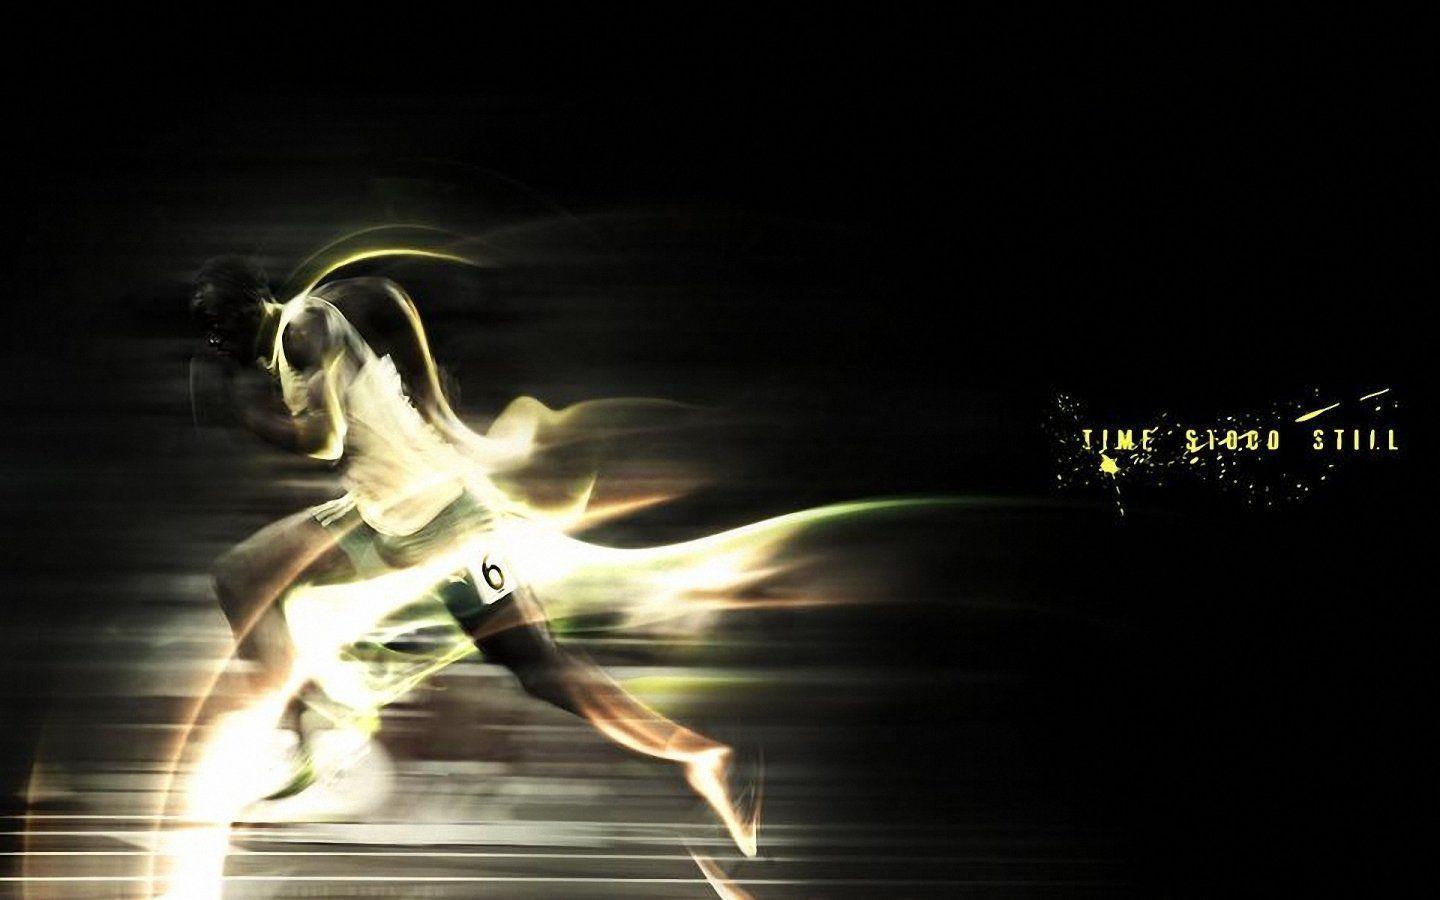 Usain Bolt Time Stood Still 1440x900 Wallpaper, 1440x900